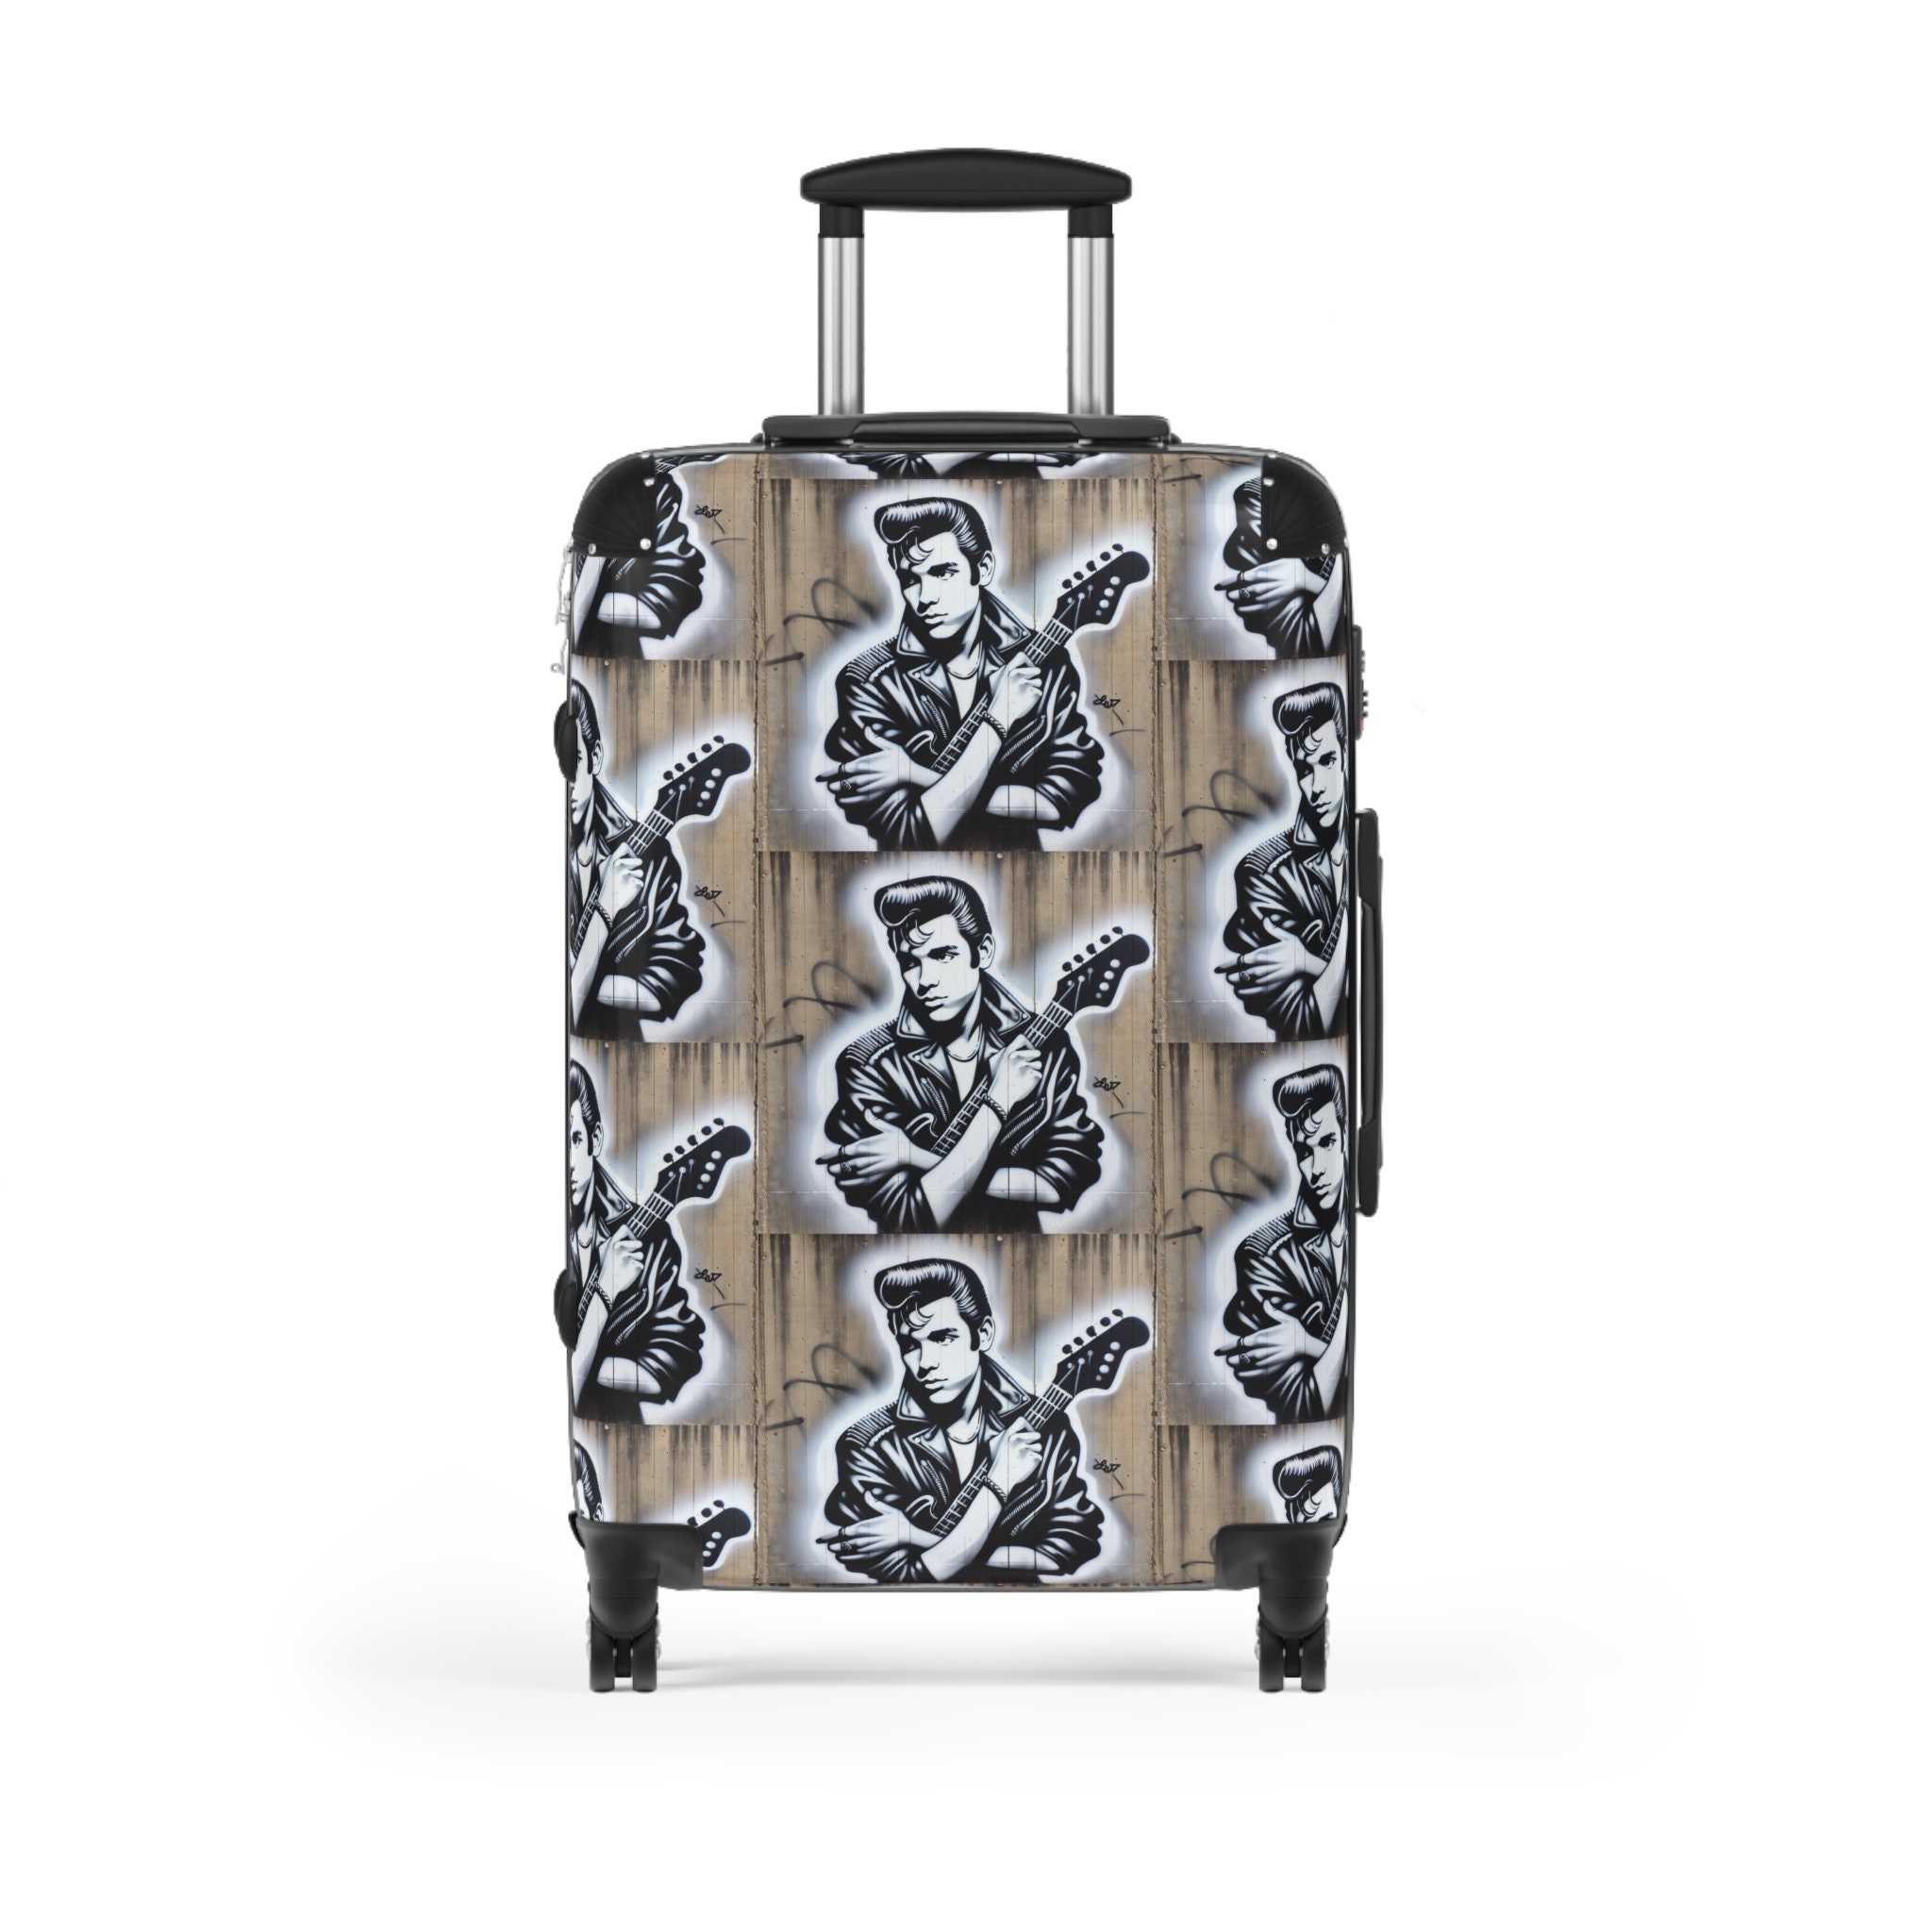 Elvis Presley travel suitcase